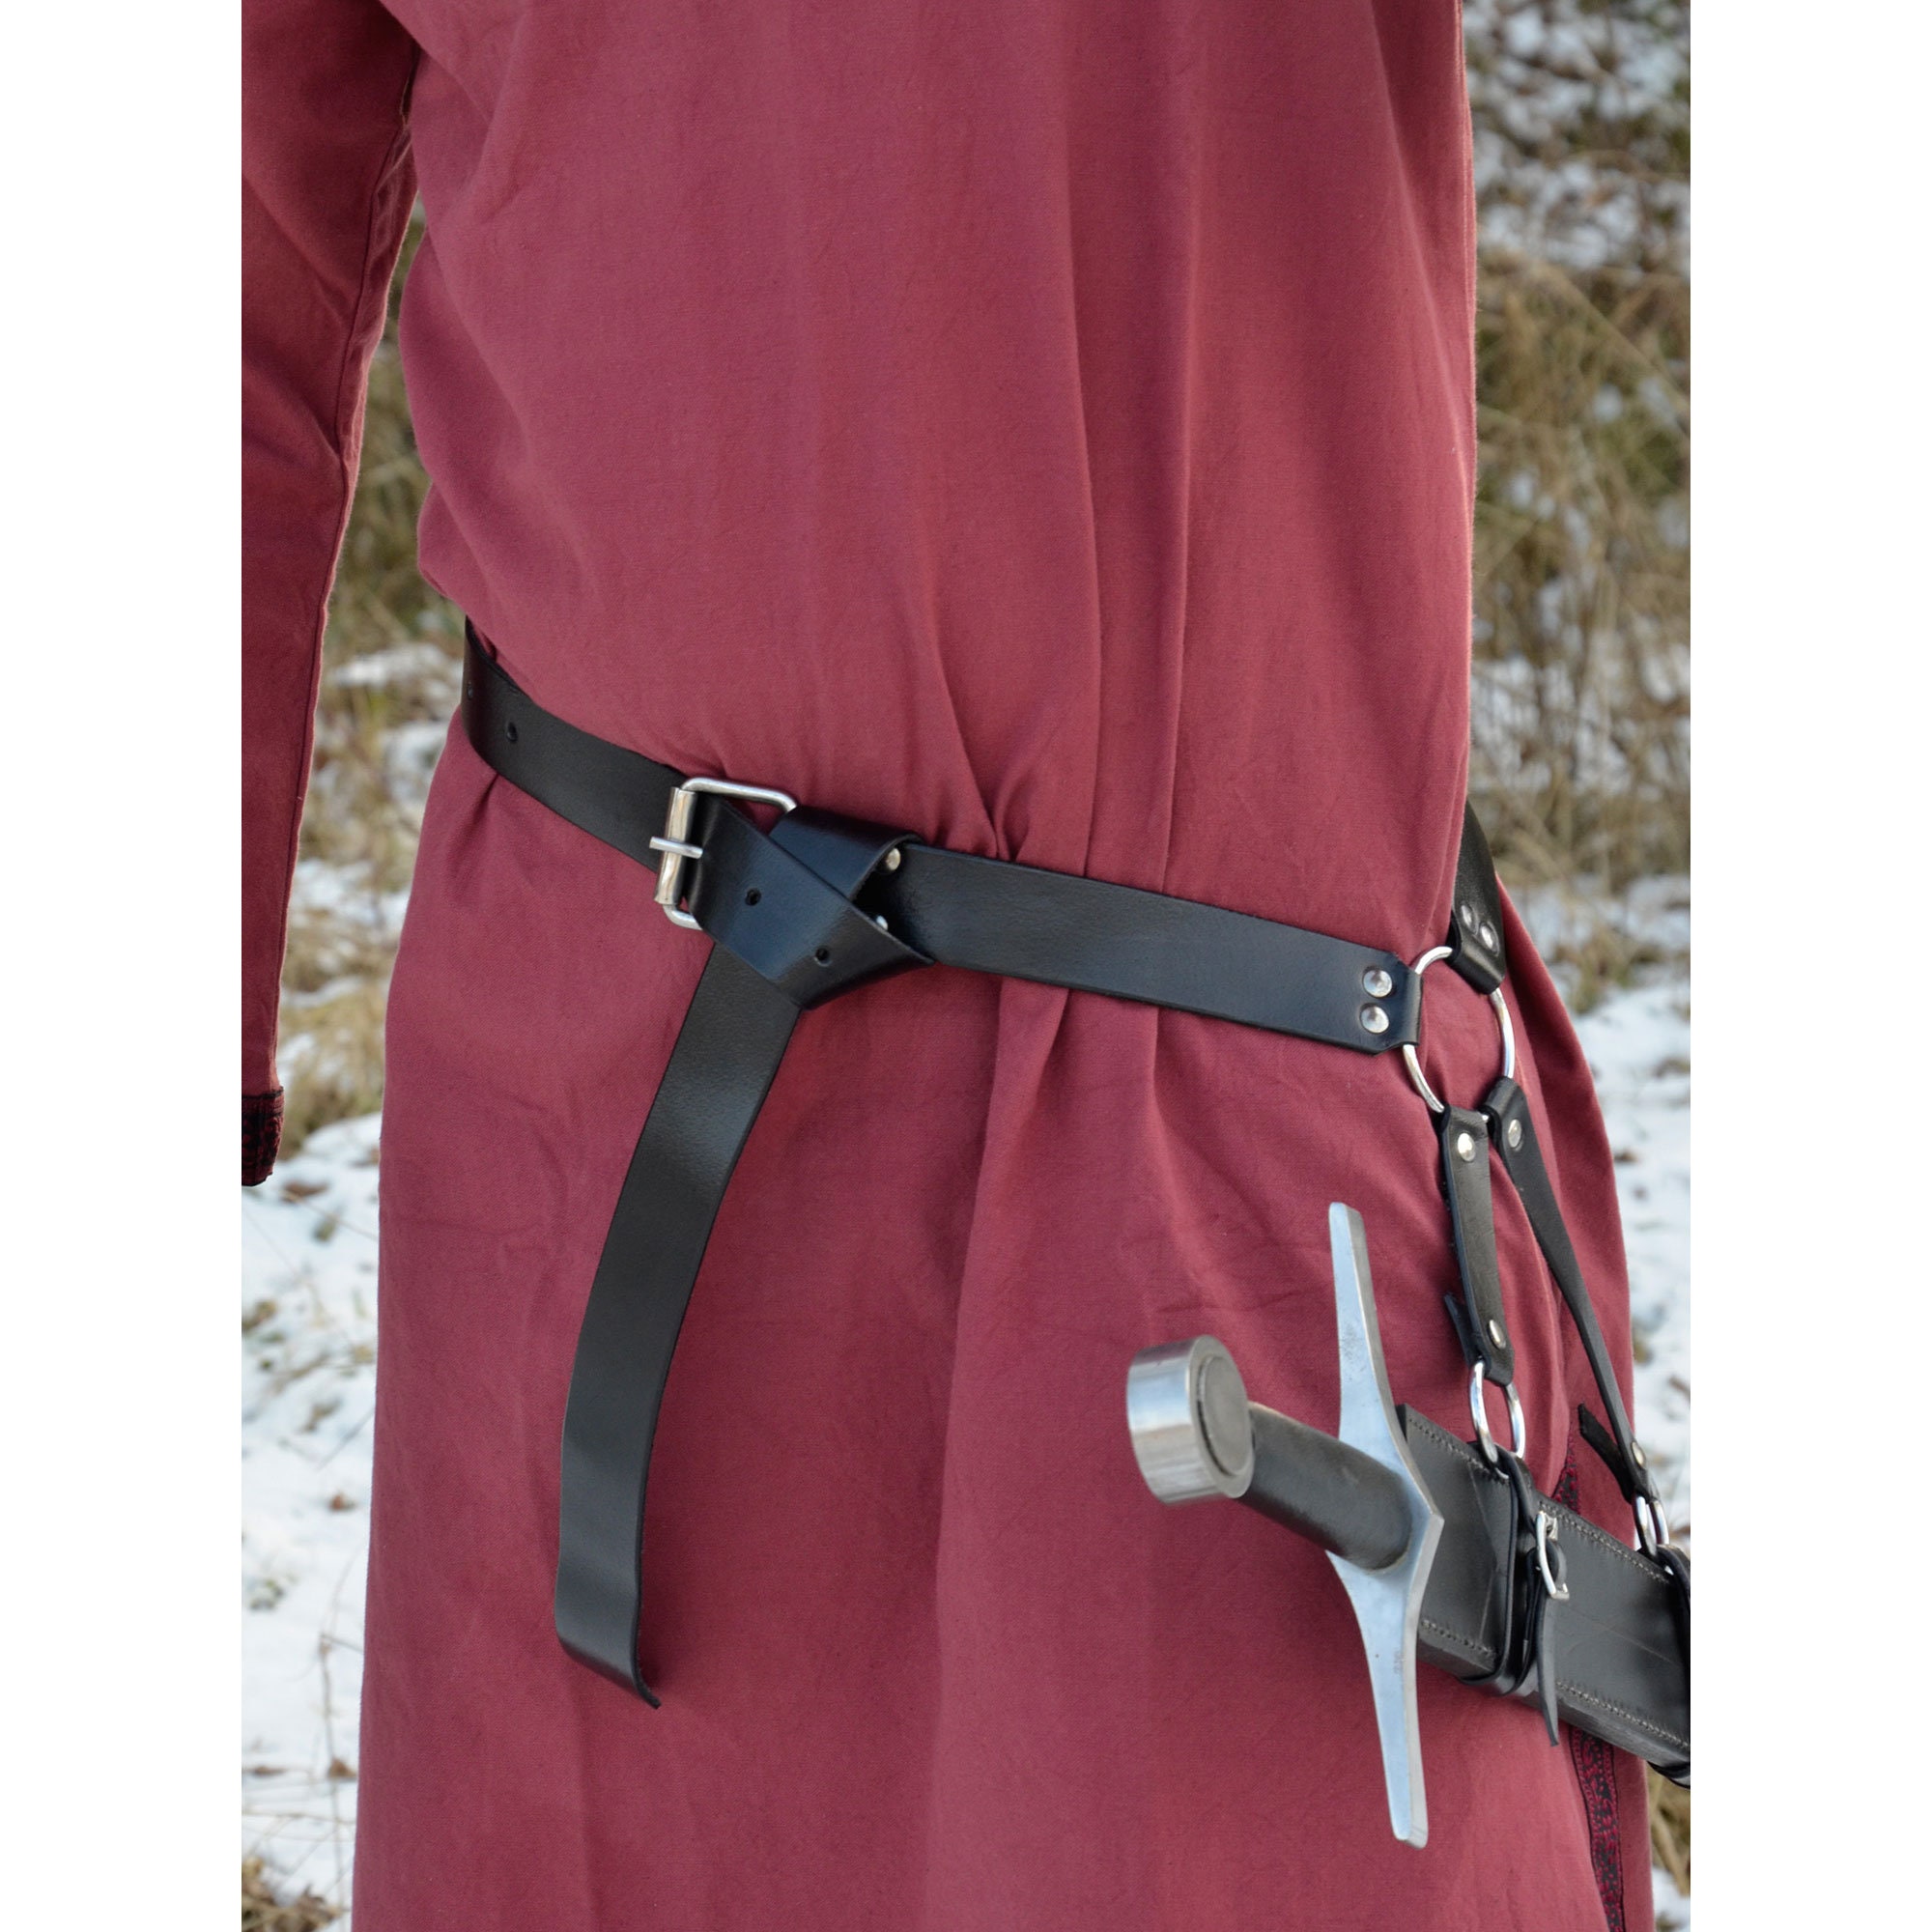 Medieval Sword Belt Made of Black Leather -  Canada